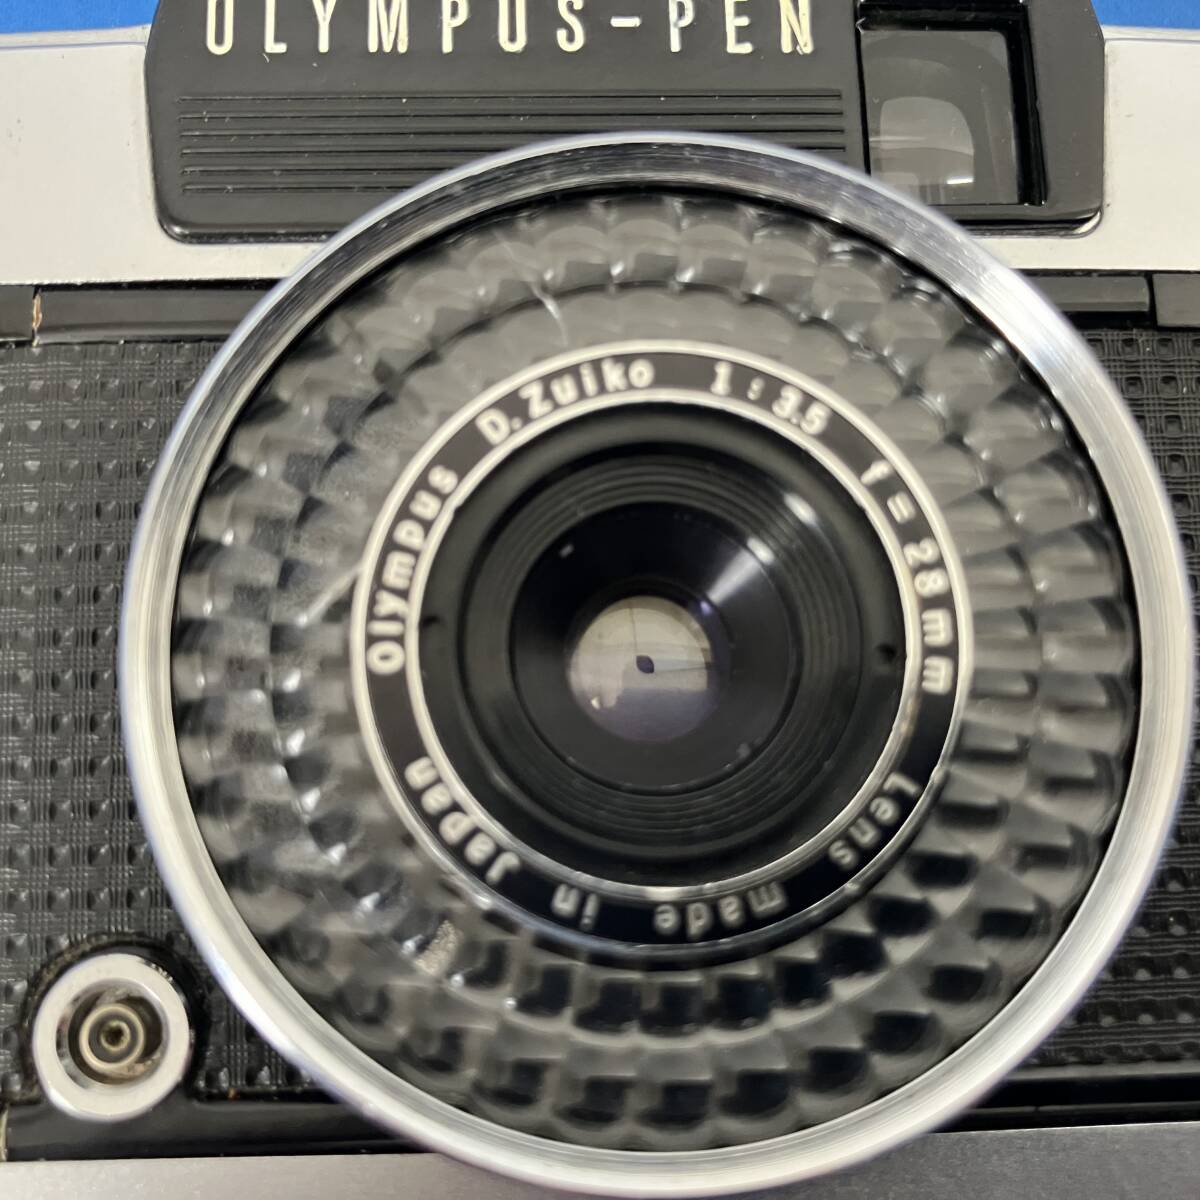 OLYMPUS-PEN EE-3 D.ZUIKO 1:3.5 f=28mm Olympus pen film camera operation not yet verification 